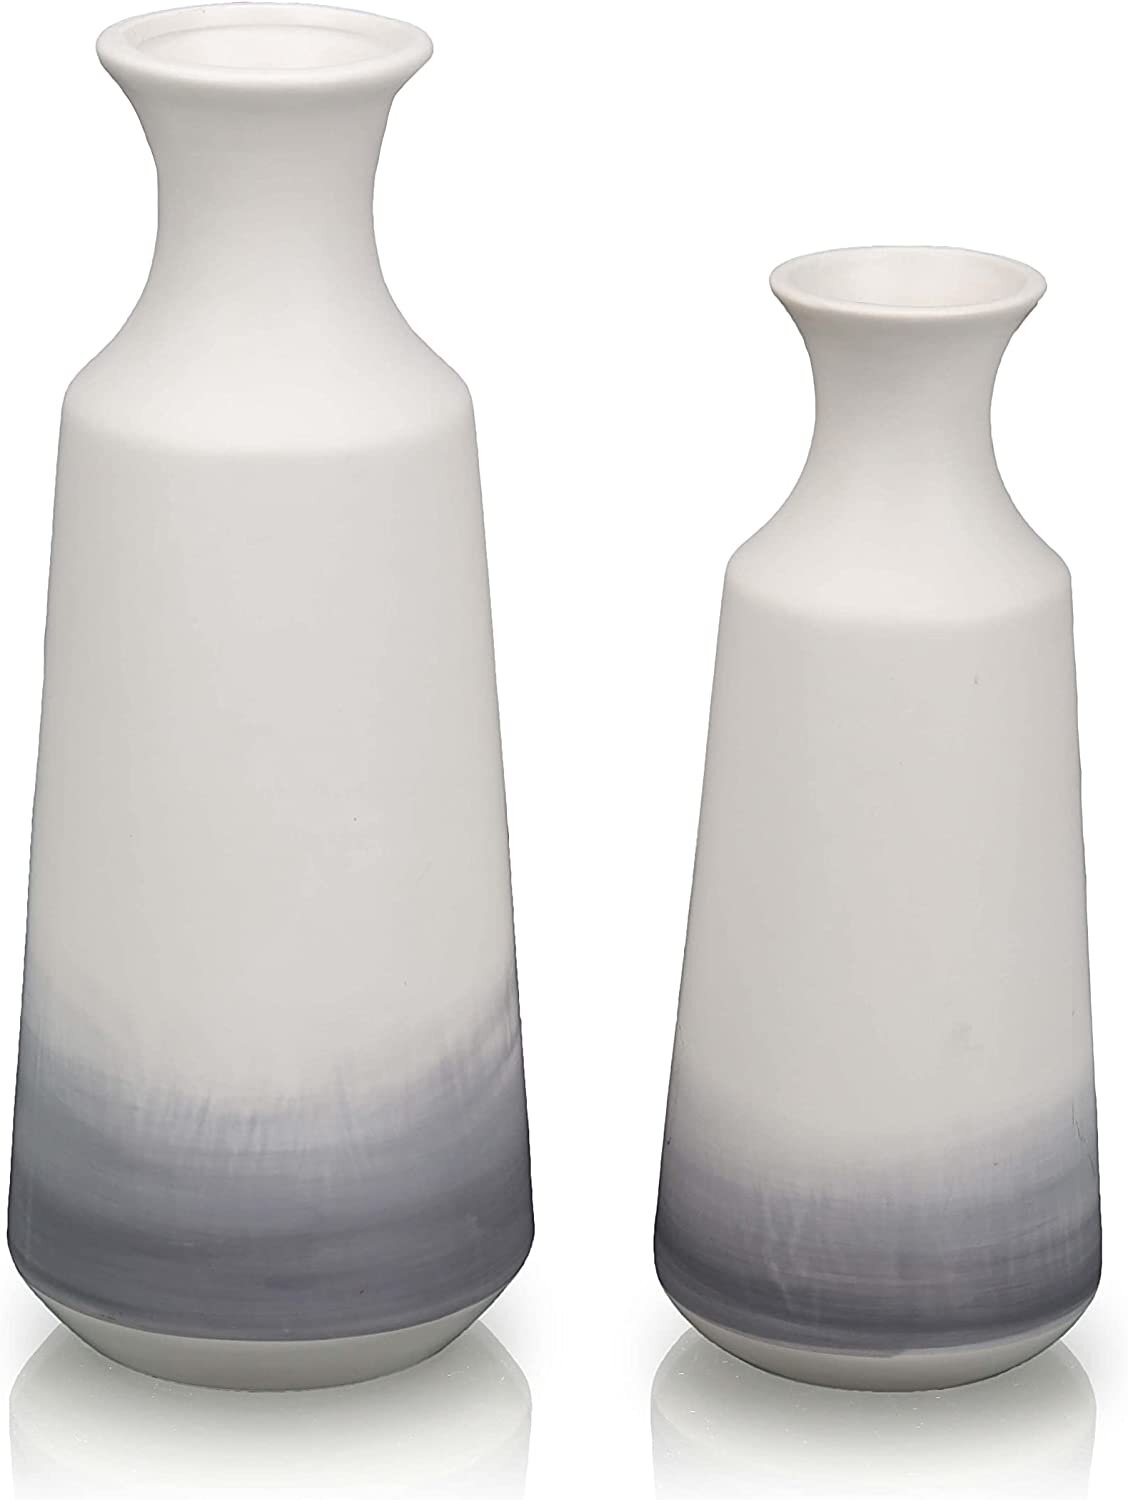 Details about   Minimalist Desktop Ceramic Flower Vase Fresh Vases Office Home Wedding Decor 